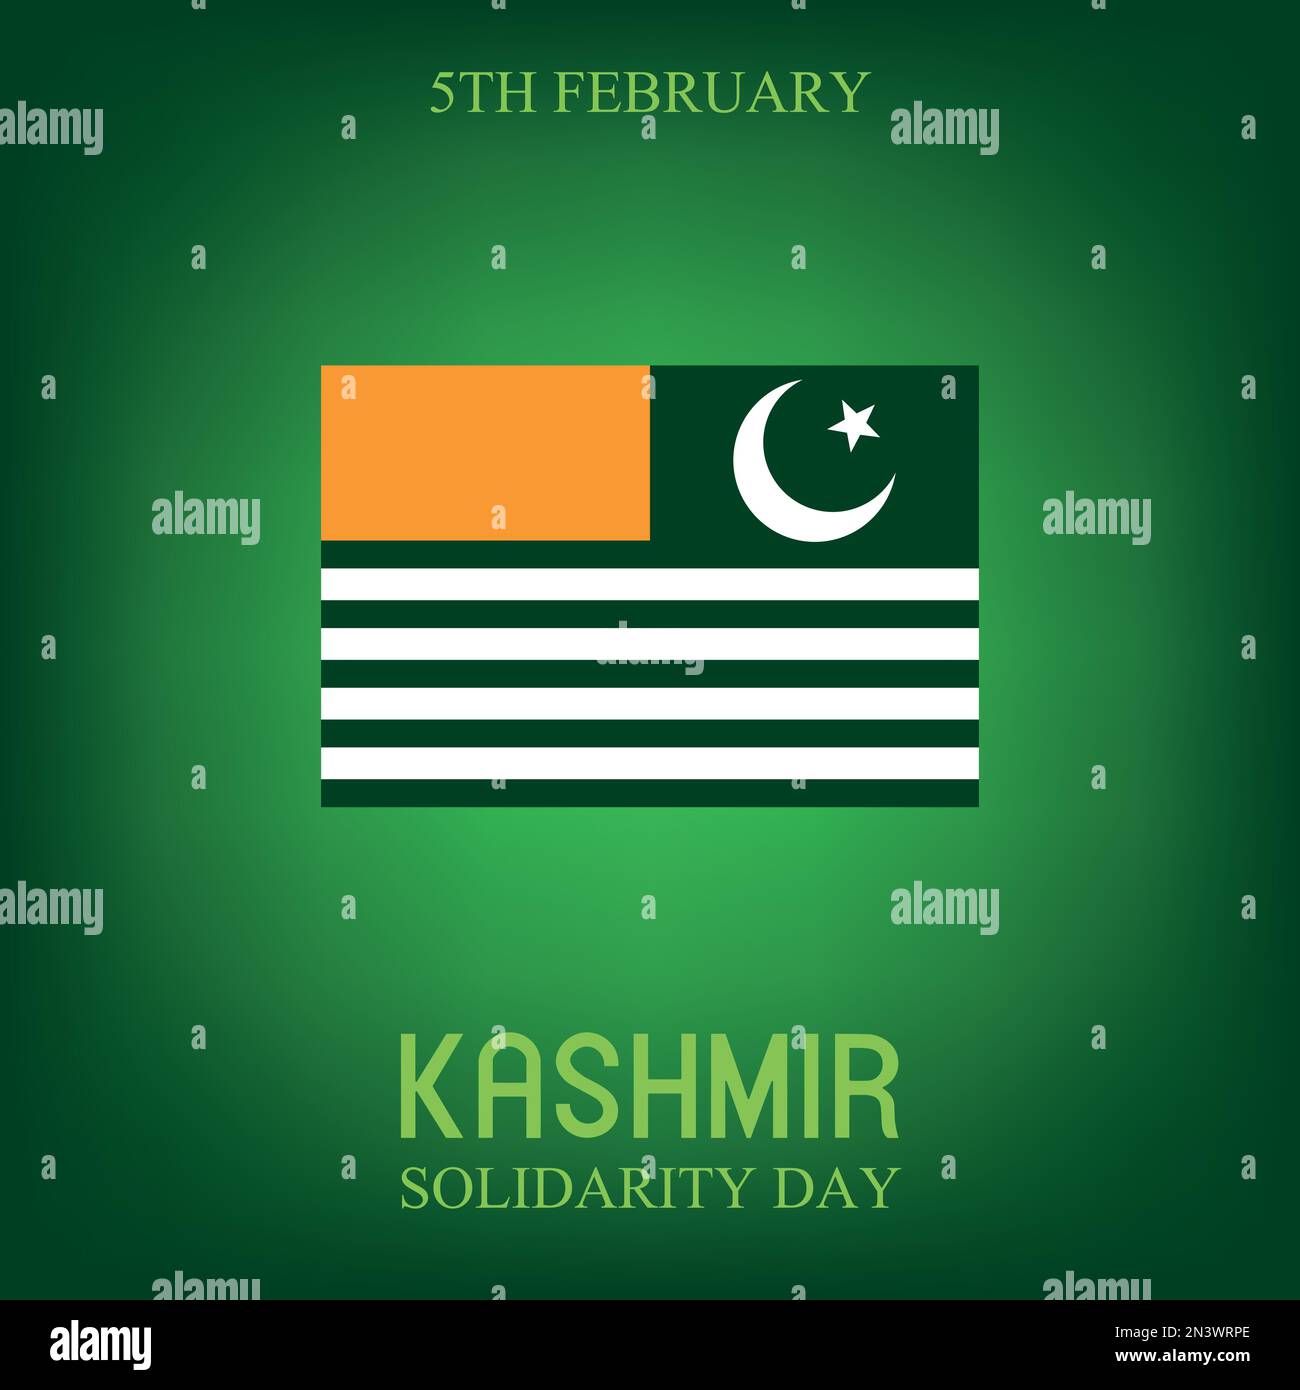 5th February Kashmir solidarity day, vector illustration Stock Vector